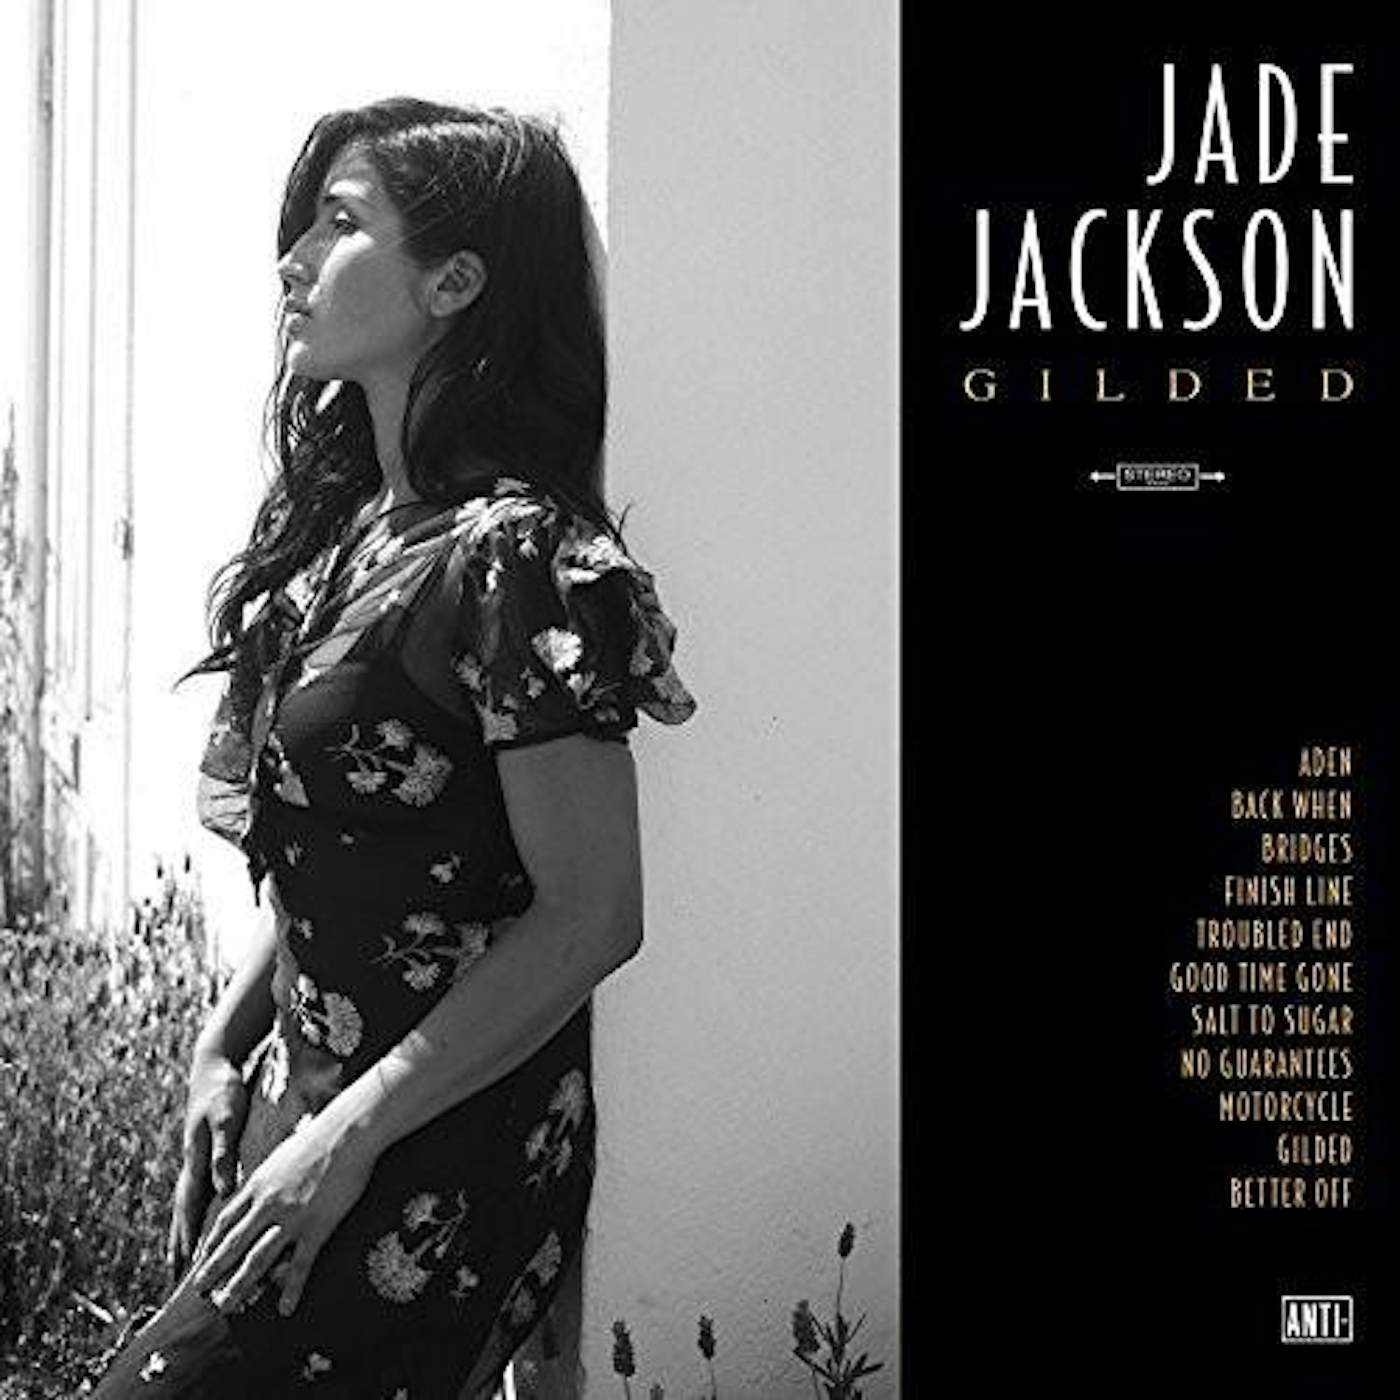 Jade Jackson Gilded LP (Vinyl)